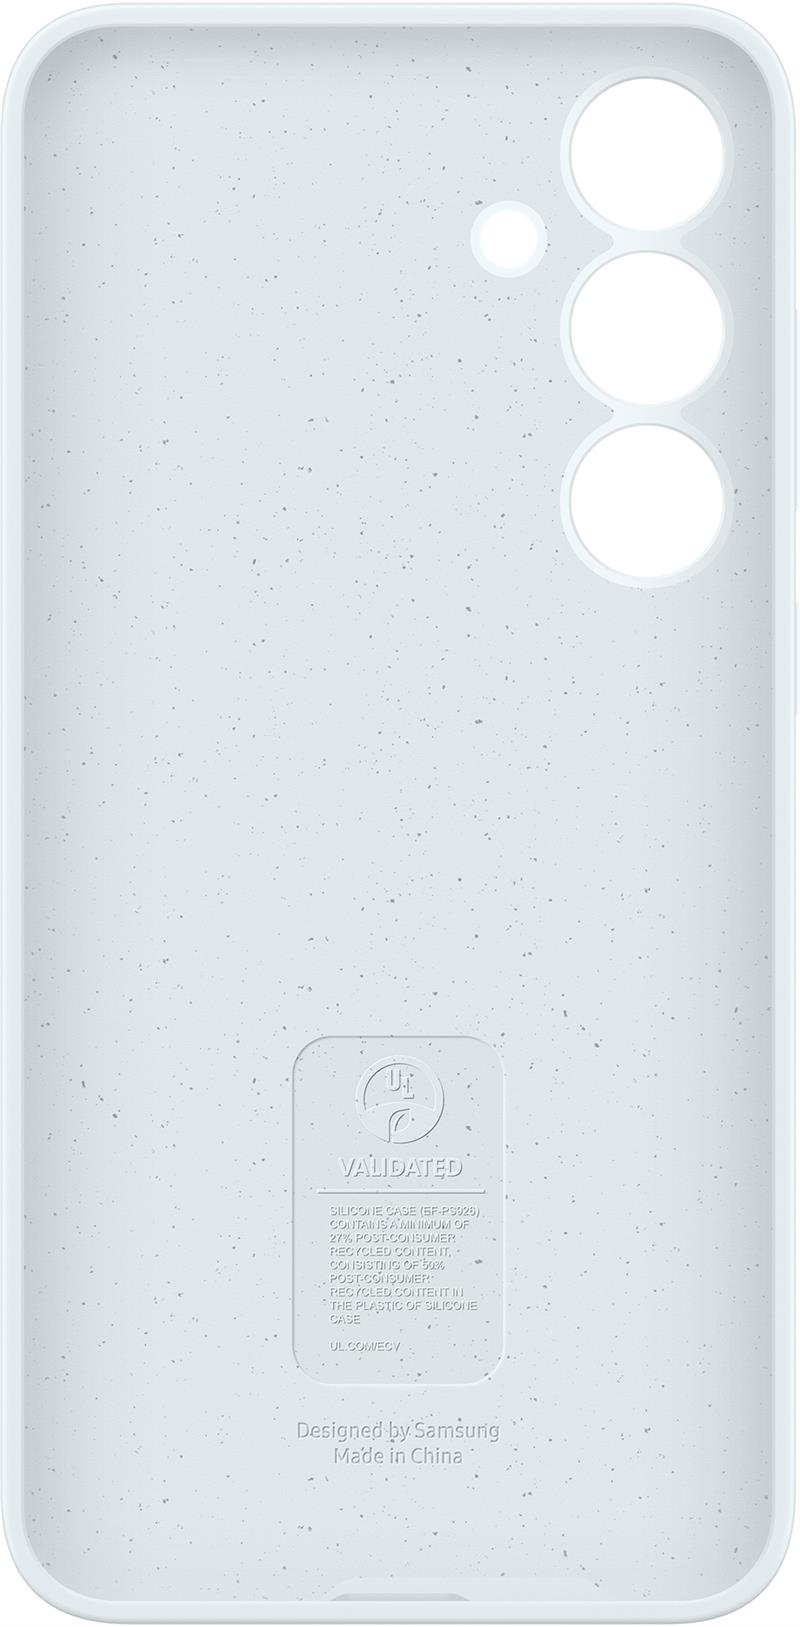 Samsung Silicone Case White mobiele telefoon behuizingen 17 cm (6.7"") Hoes Wit